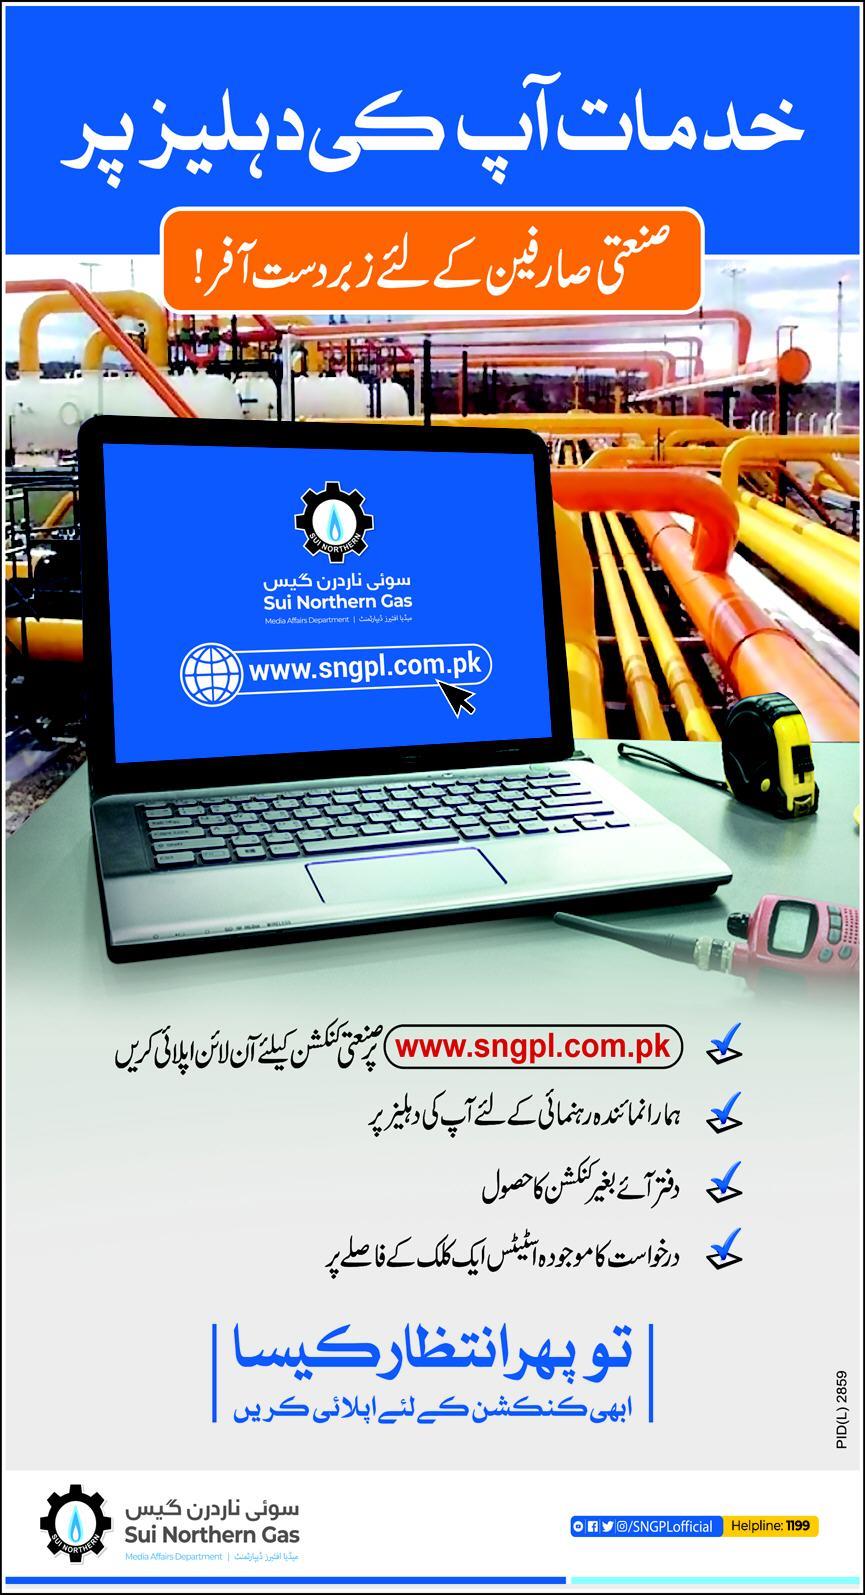 SSGC Duplicate Bill Online Check & Free Download